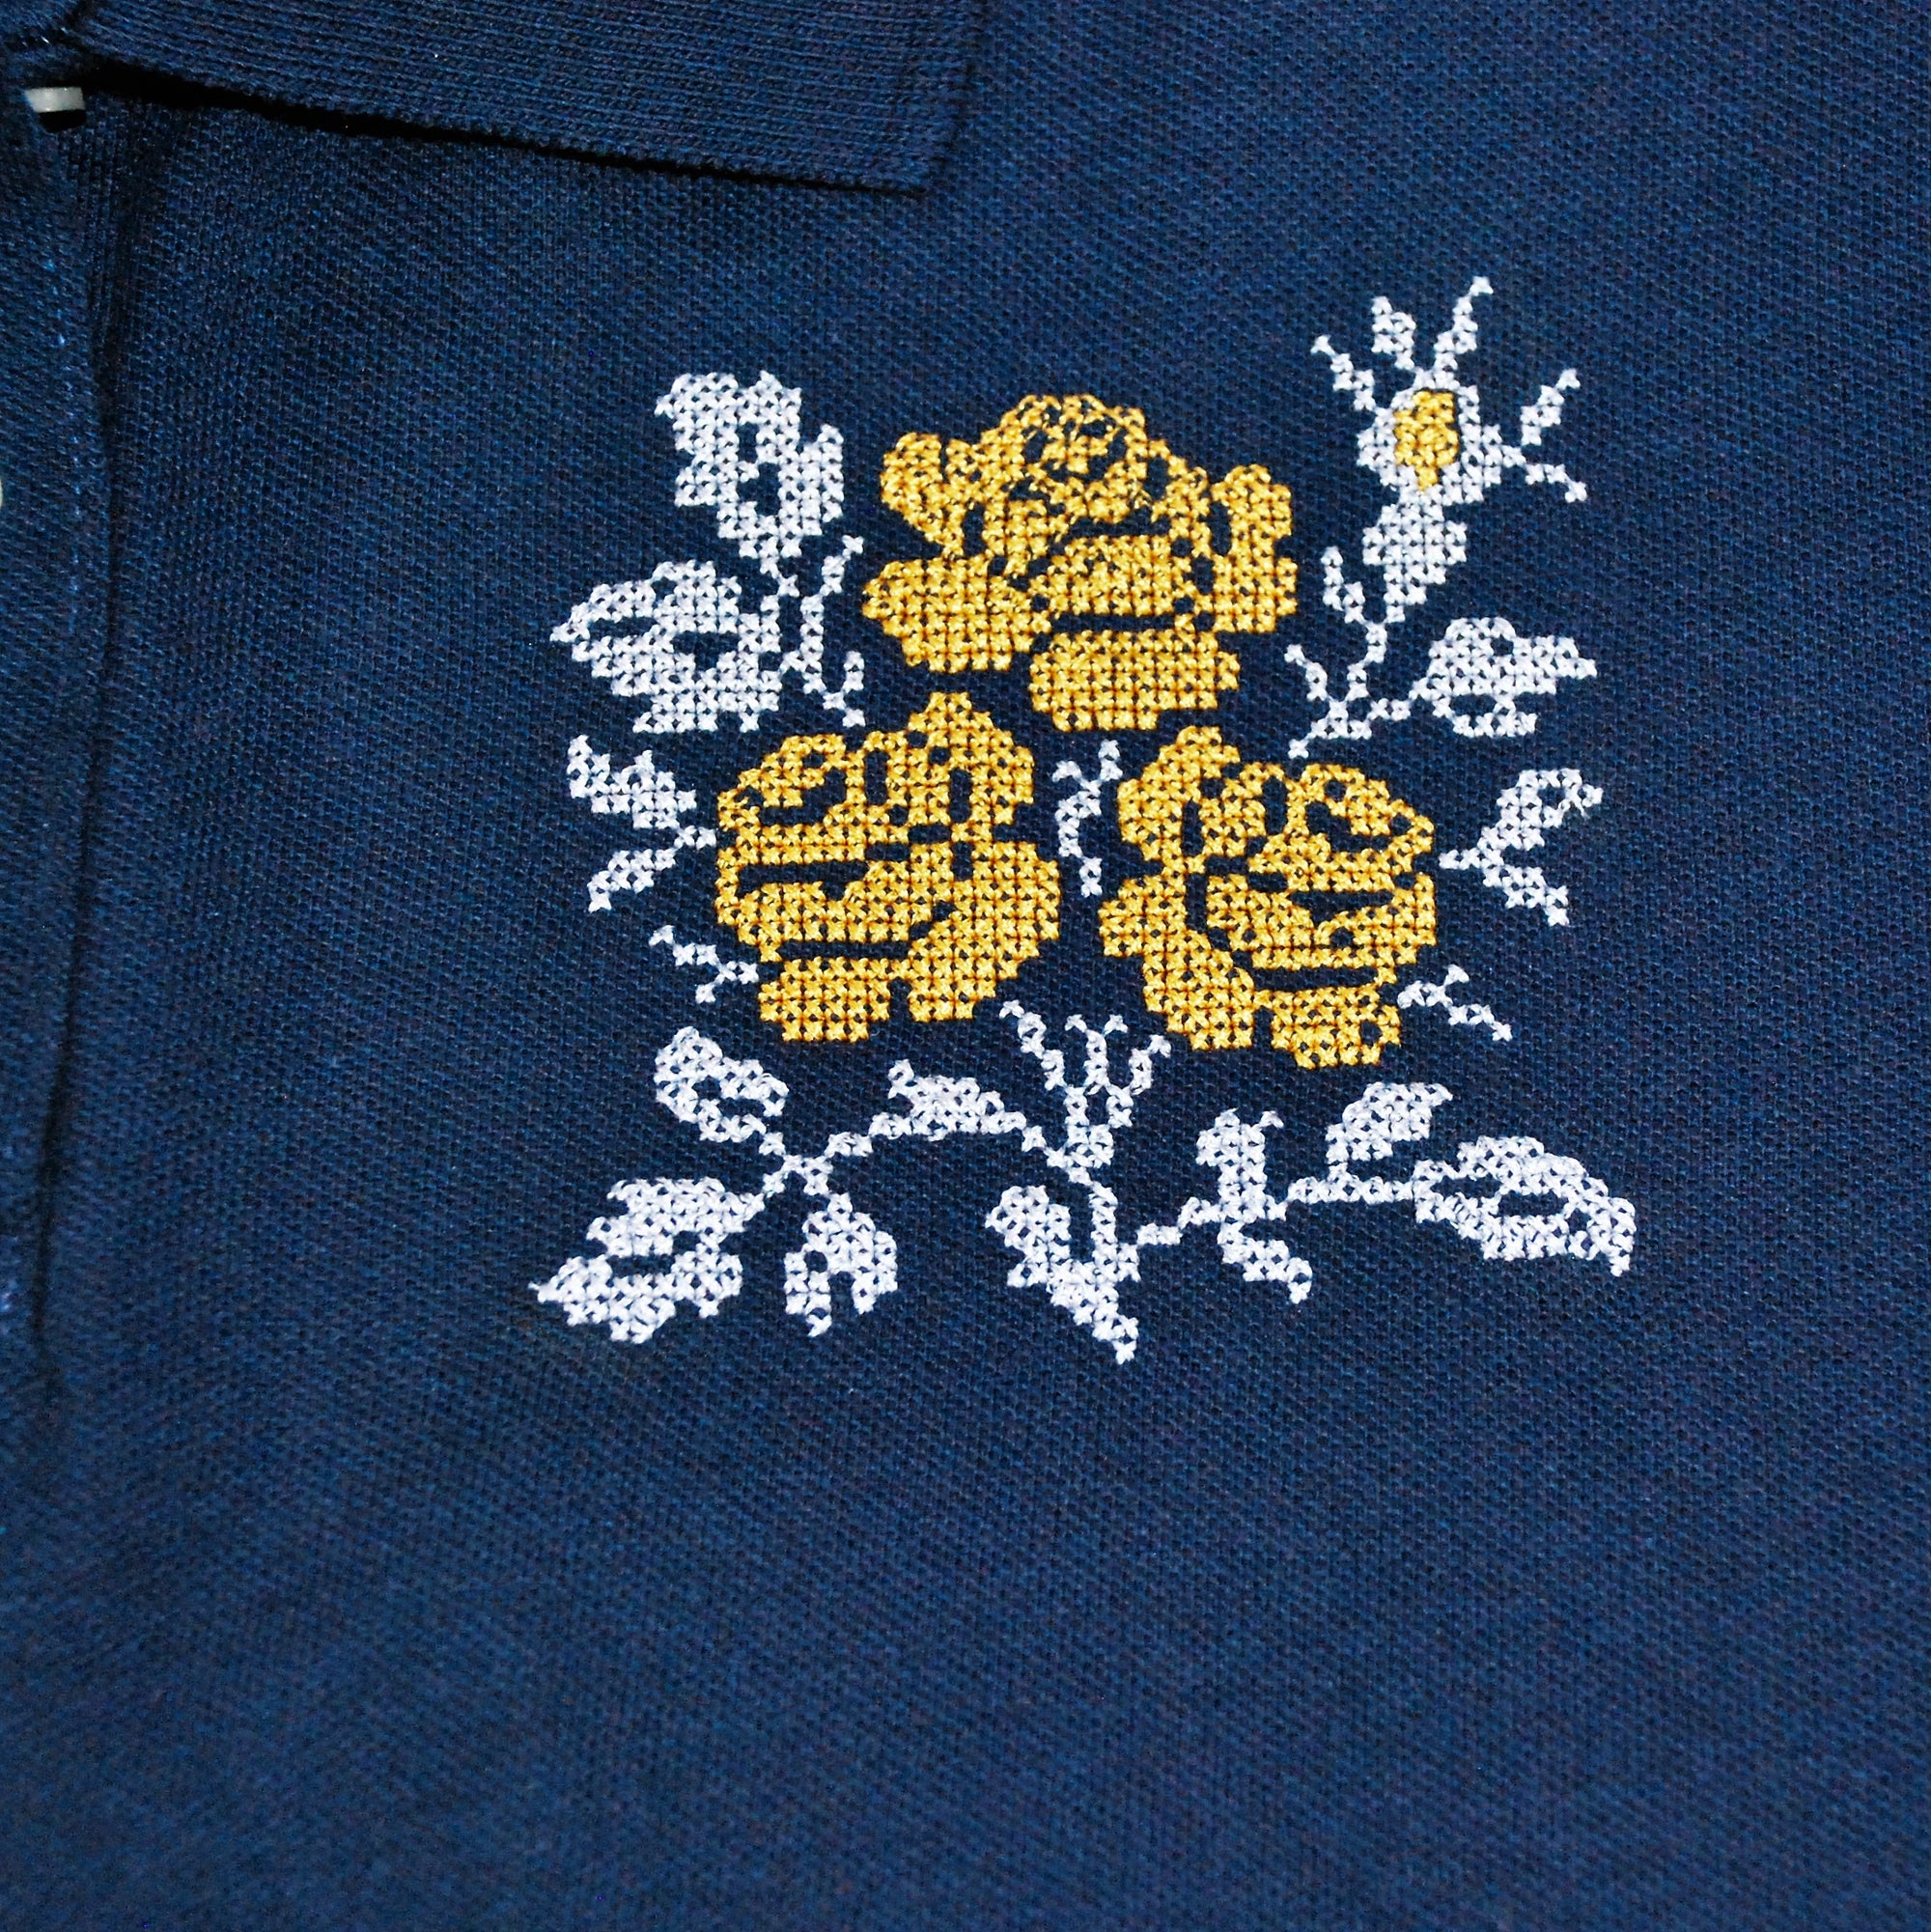 Women's polo shirt "Cross stitch roses" navy blue